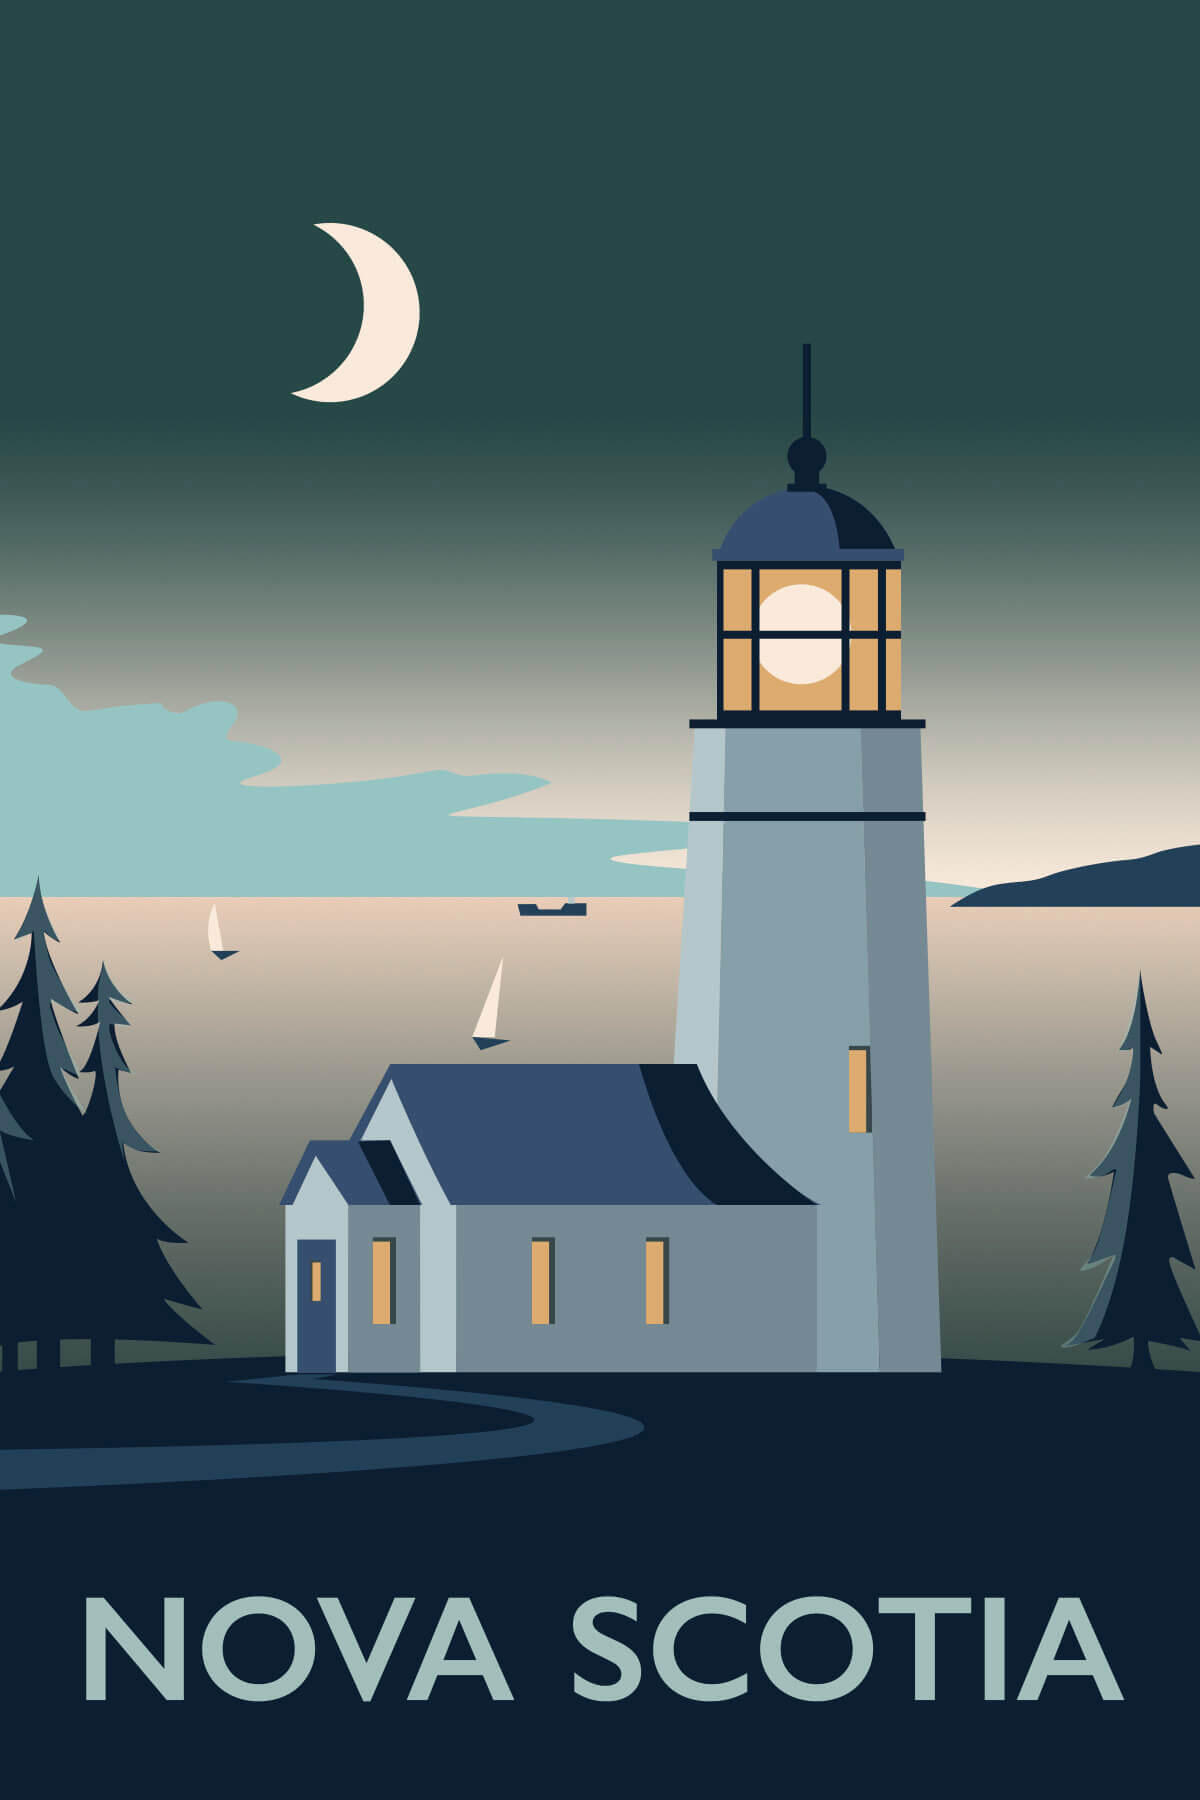 Nova Scotia travel poster showing a lighthouse.